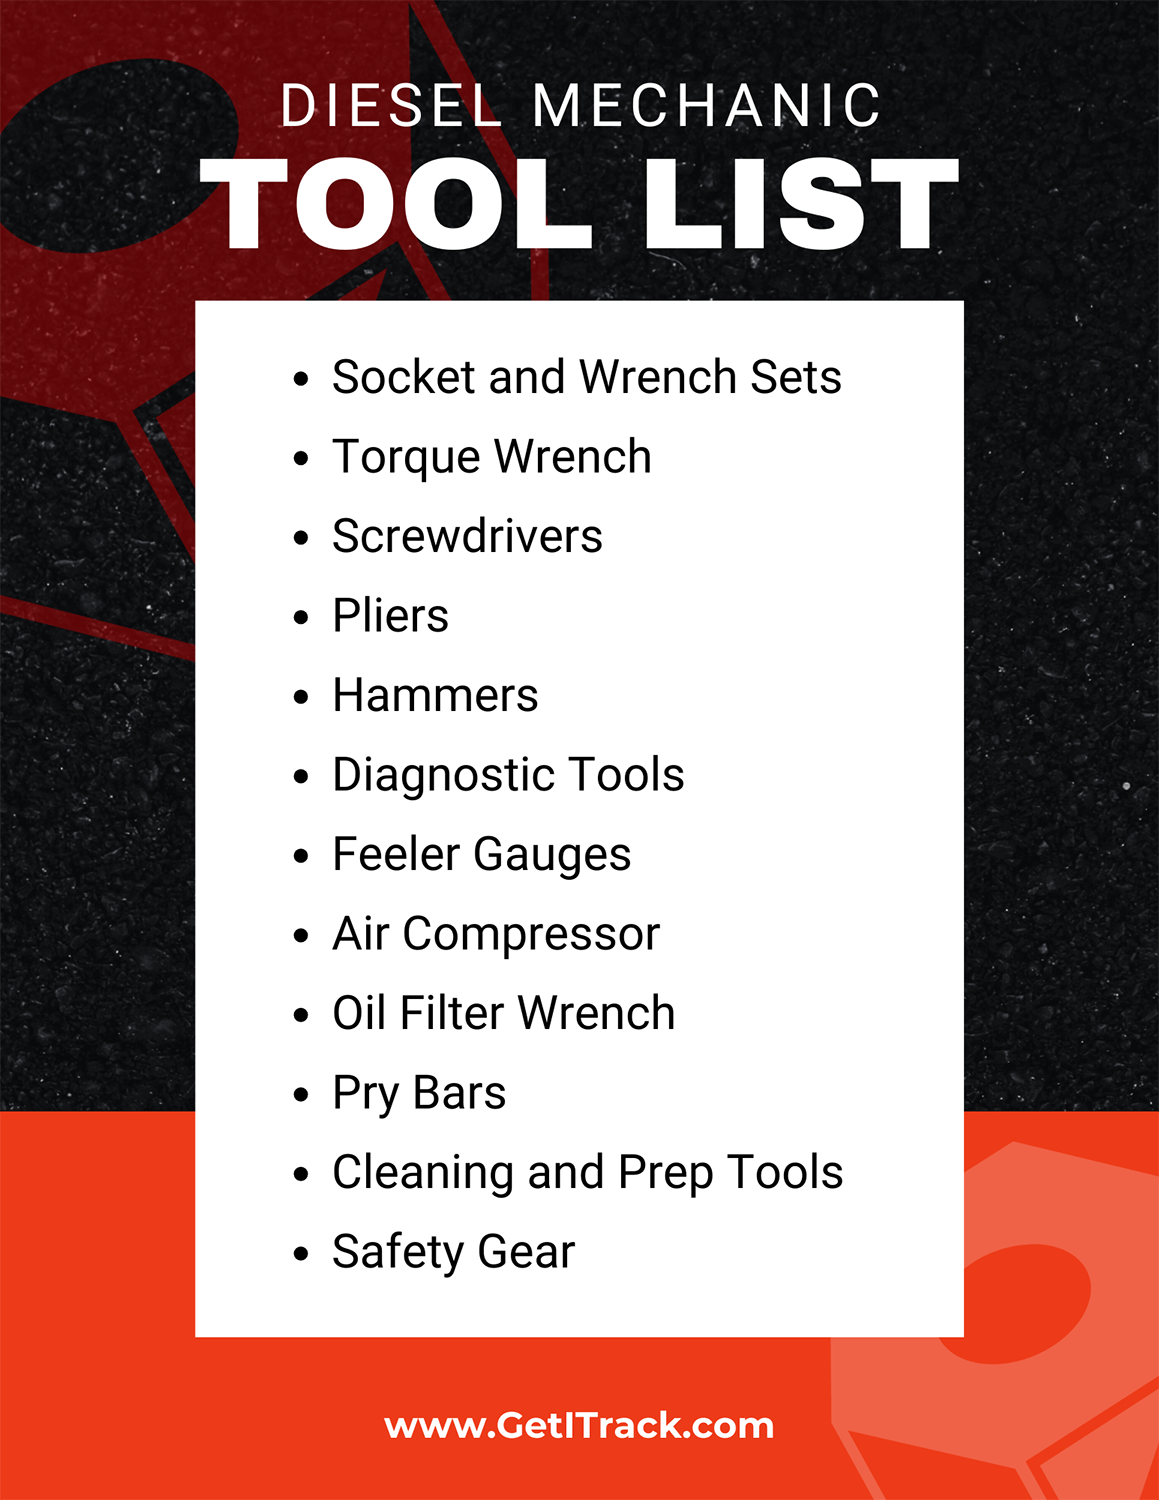 Diesel Mechanic Tool List - ITrack News